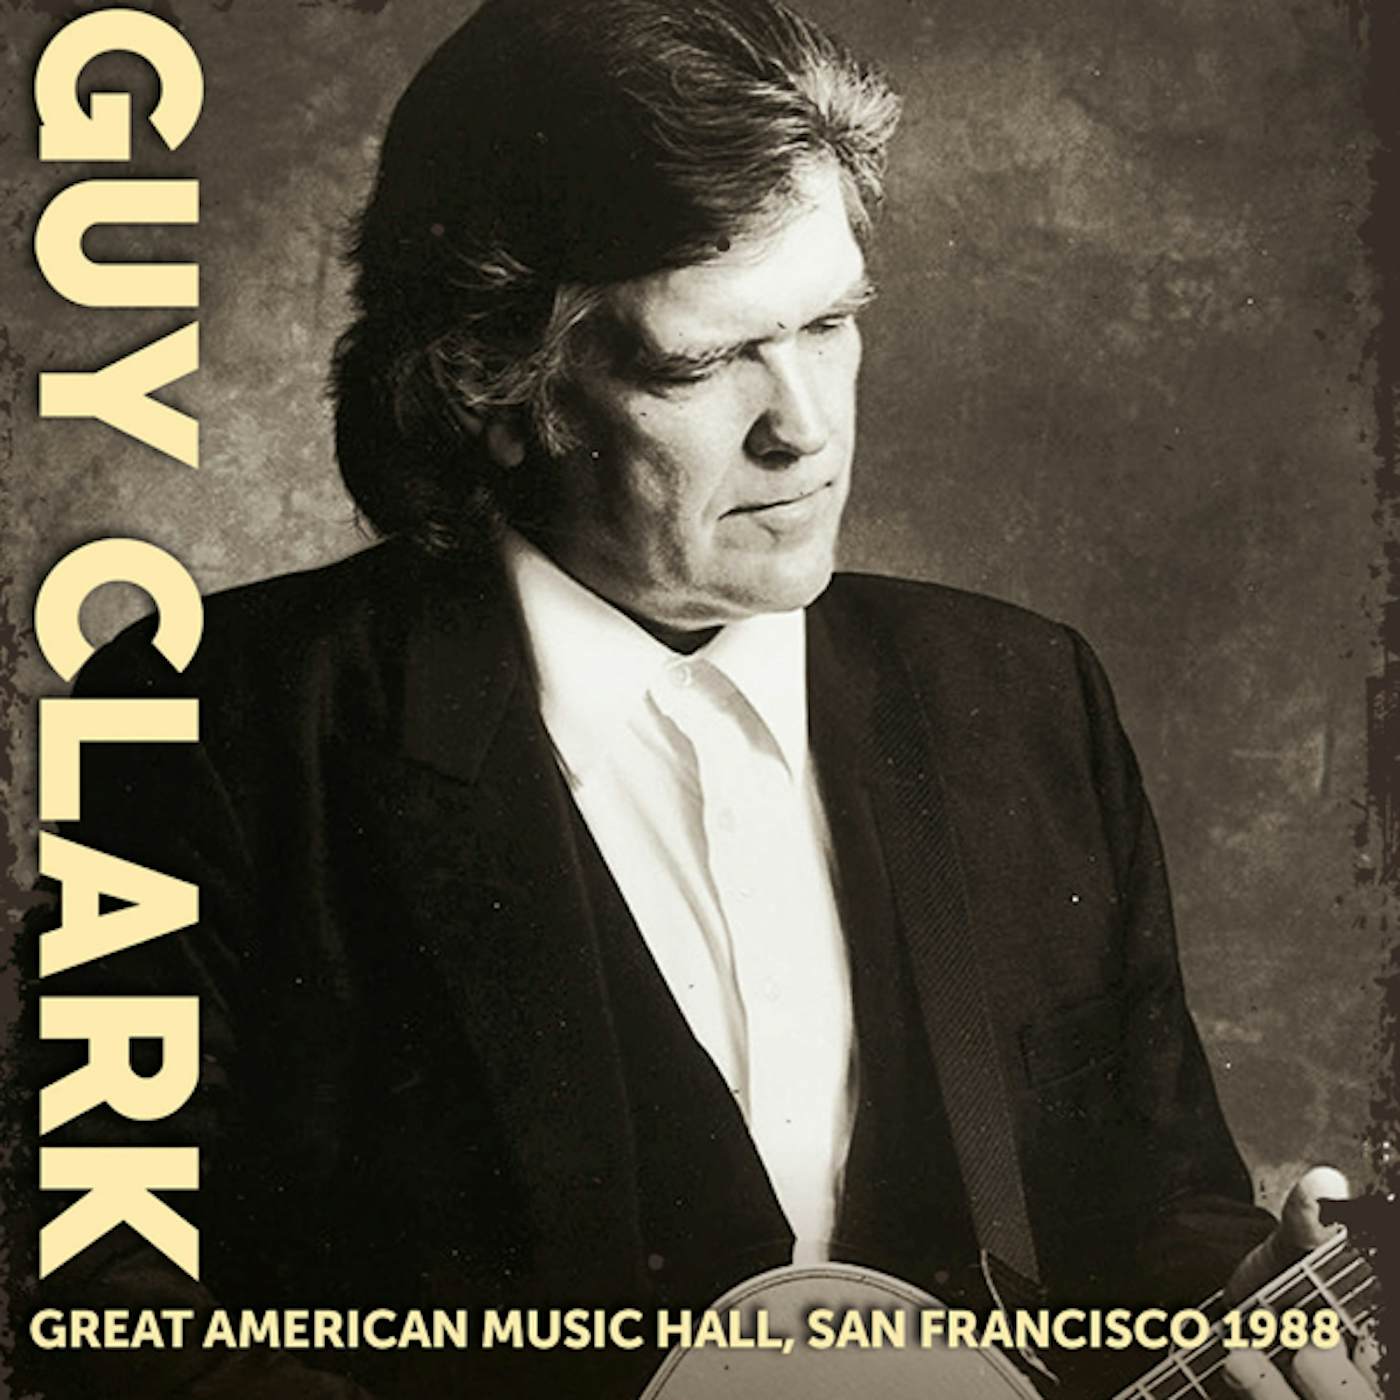 Guy Clark GREAT AMERICAN MUSIC HALL SAN FRANCISCO 1988 CD